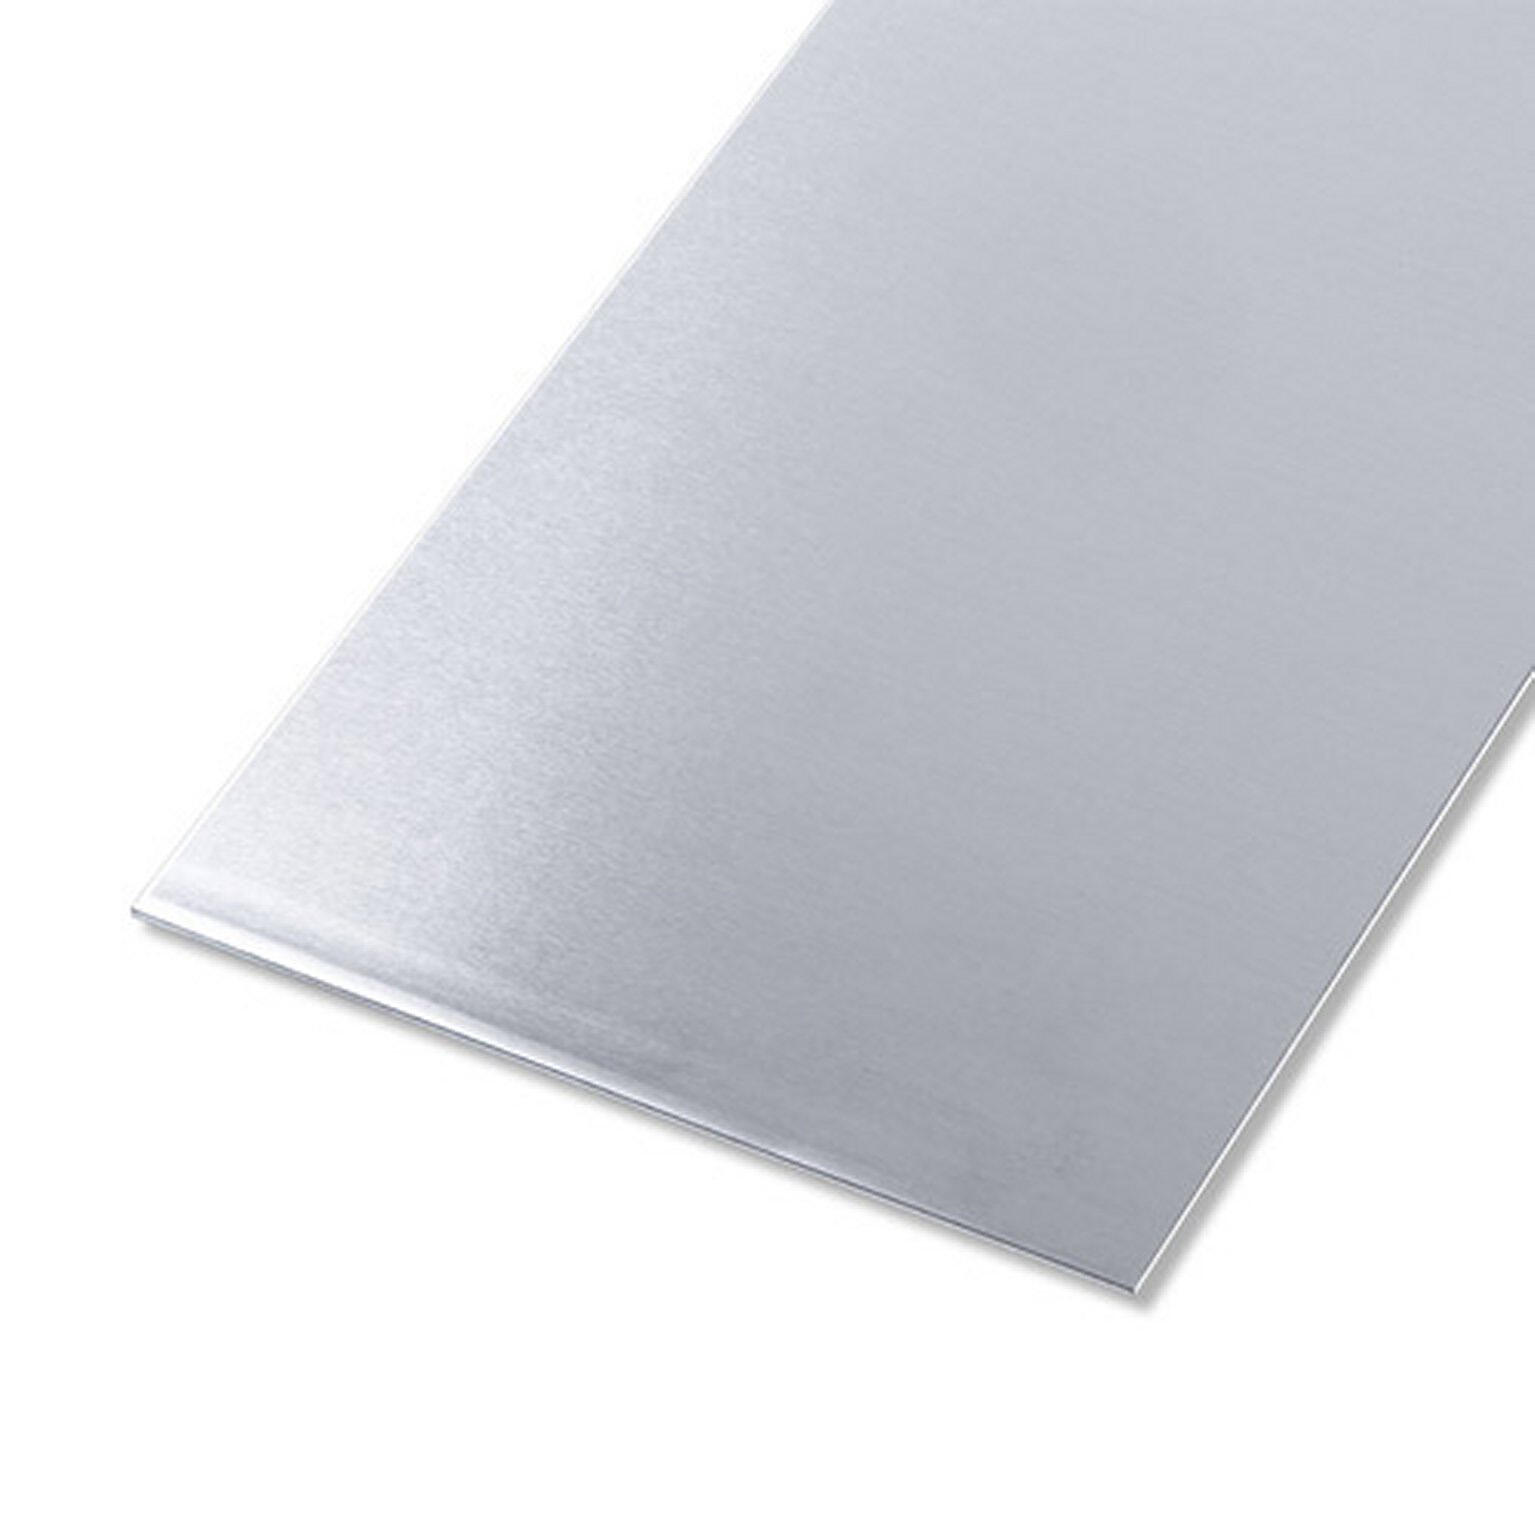 Plaque Aluminium Anodisé format 1x1mètre, Plaque Aluminium Anodisé 2mm